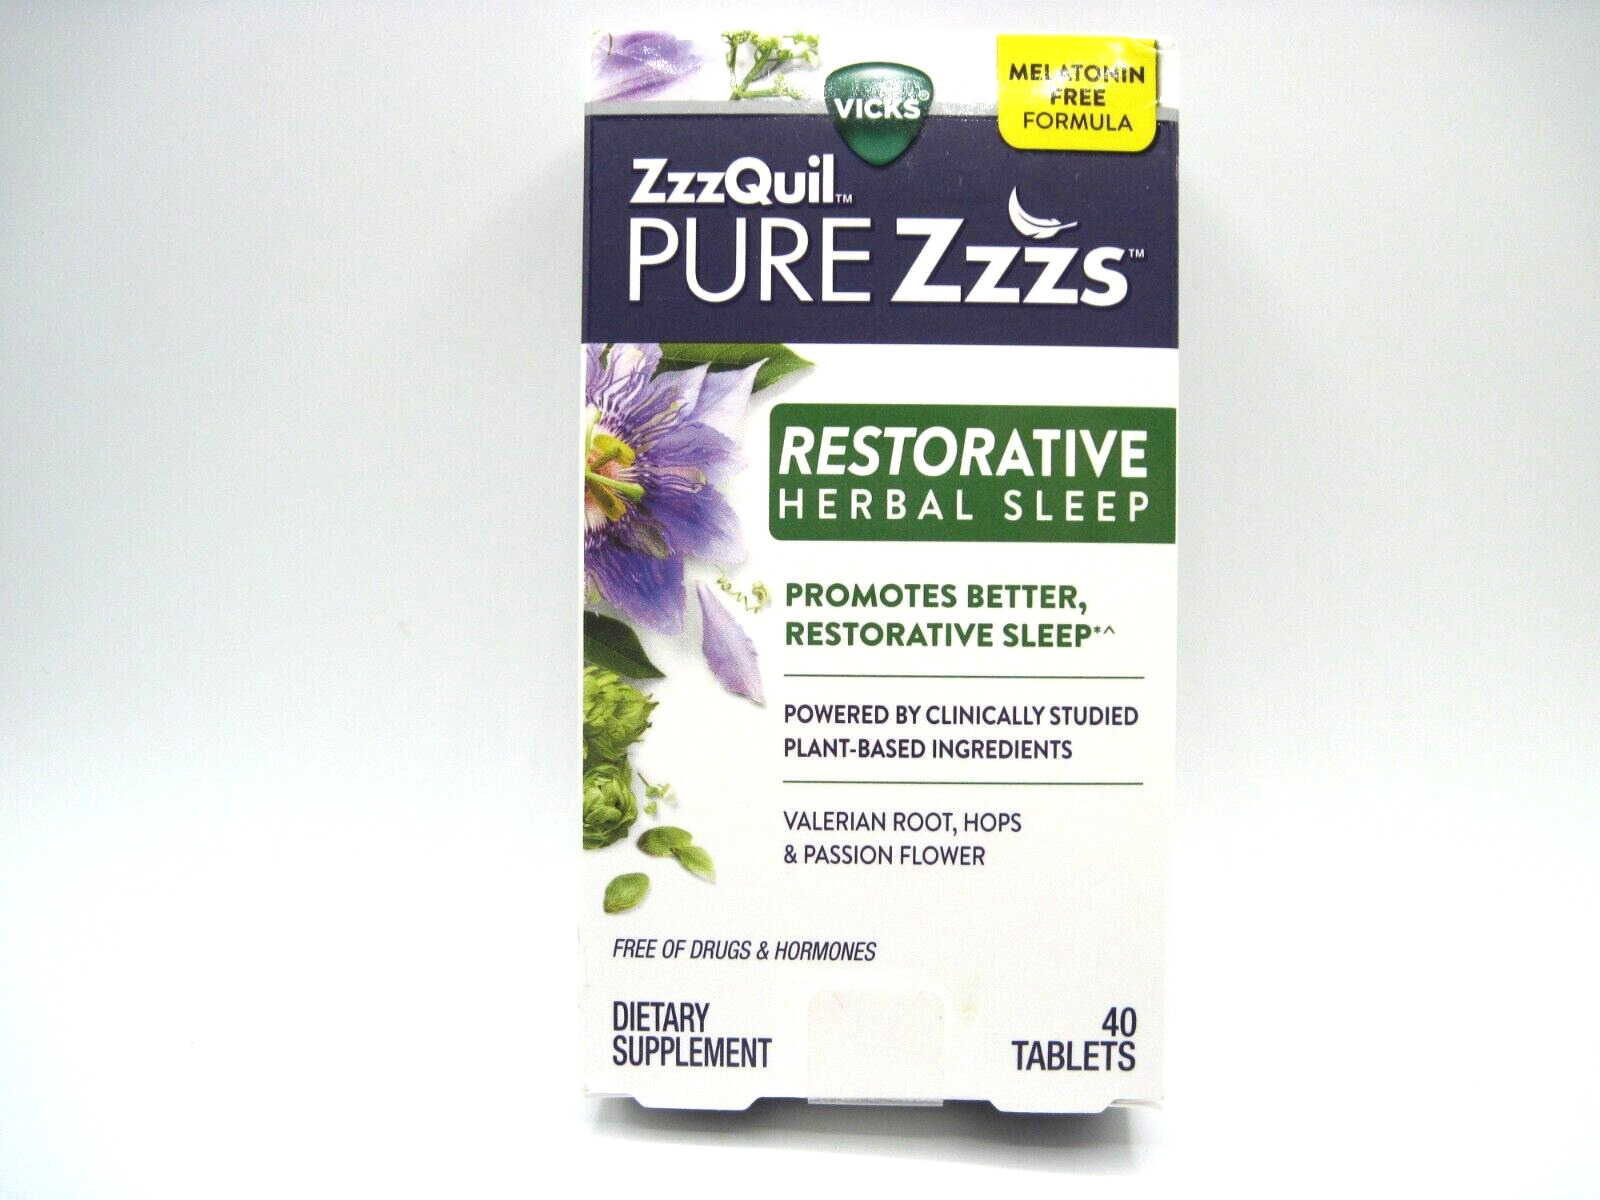 Vicks ZzzQuil Pure Zzzs Restorative Herbal Sleep Aid Medicine 40 Count Exp 4/23